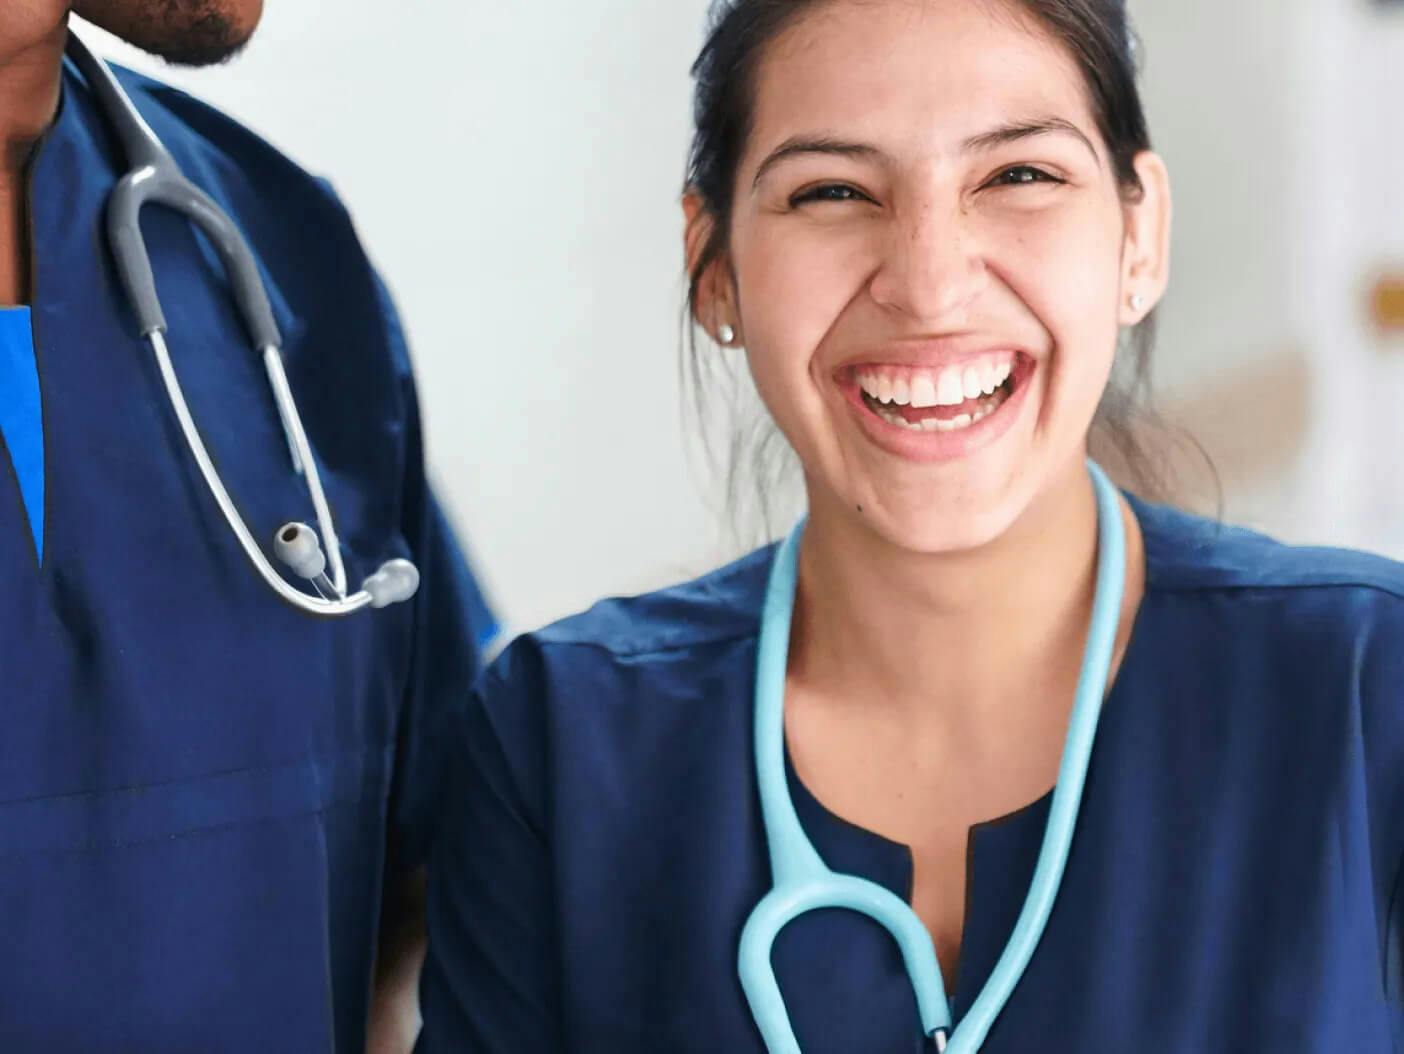 Female medical professional smiling